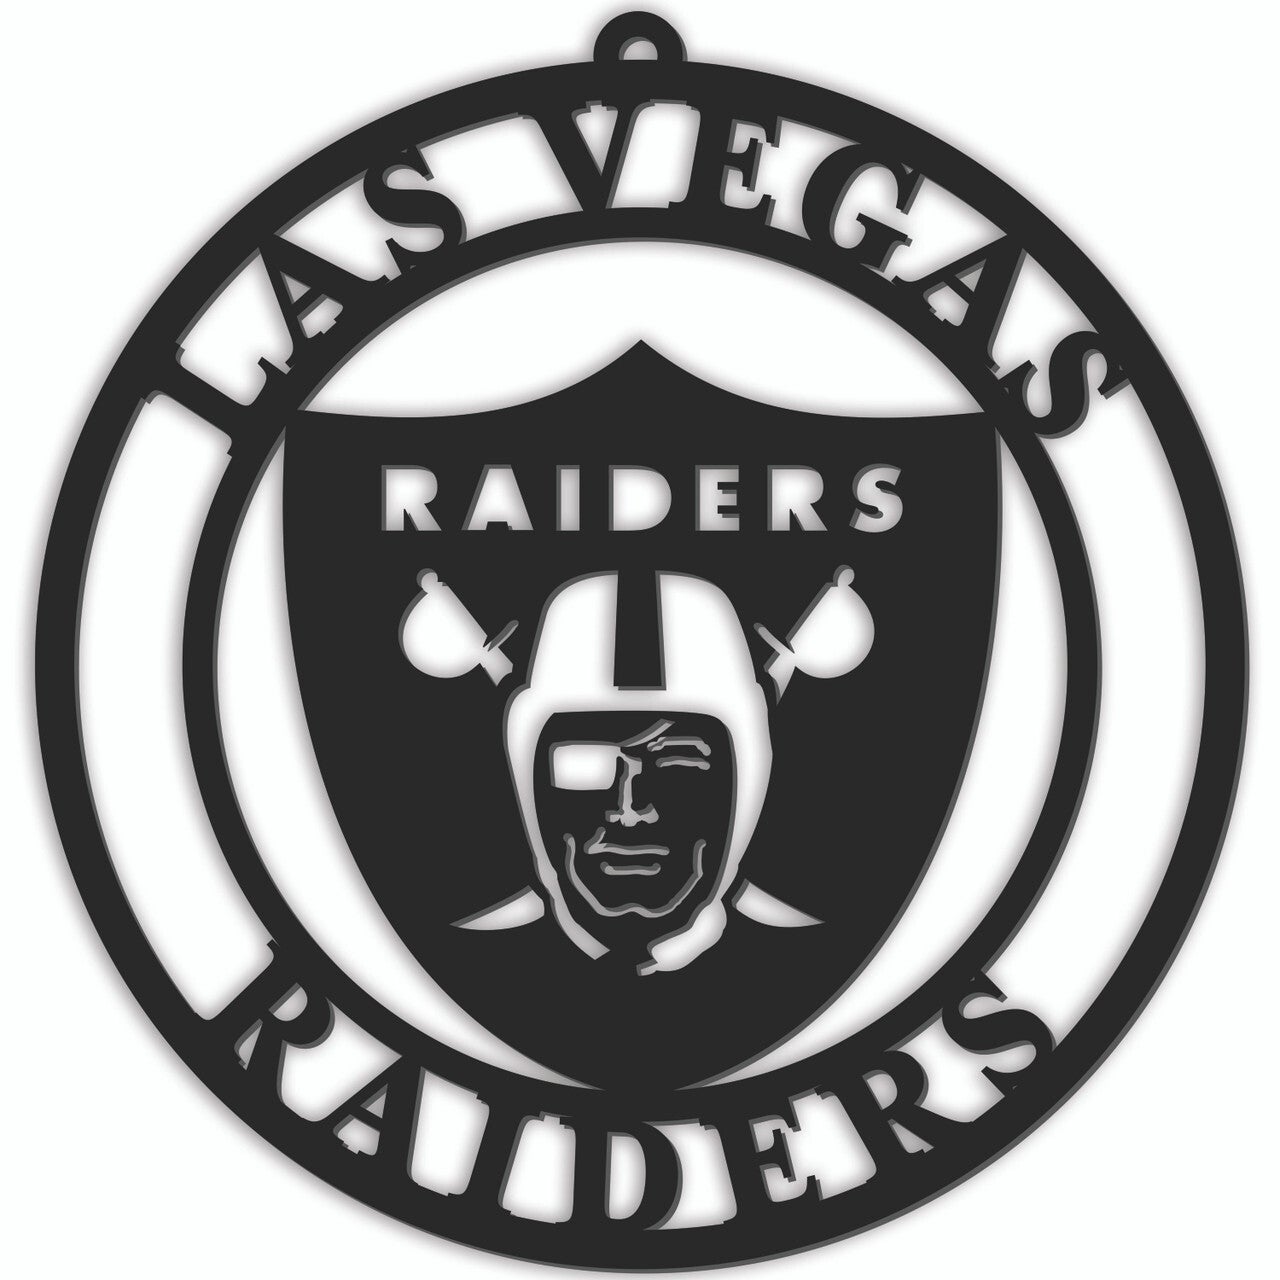 Las Vegas Raiders 18 oz. HUSTLE Travel Mug – Great American